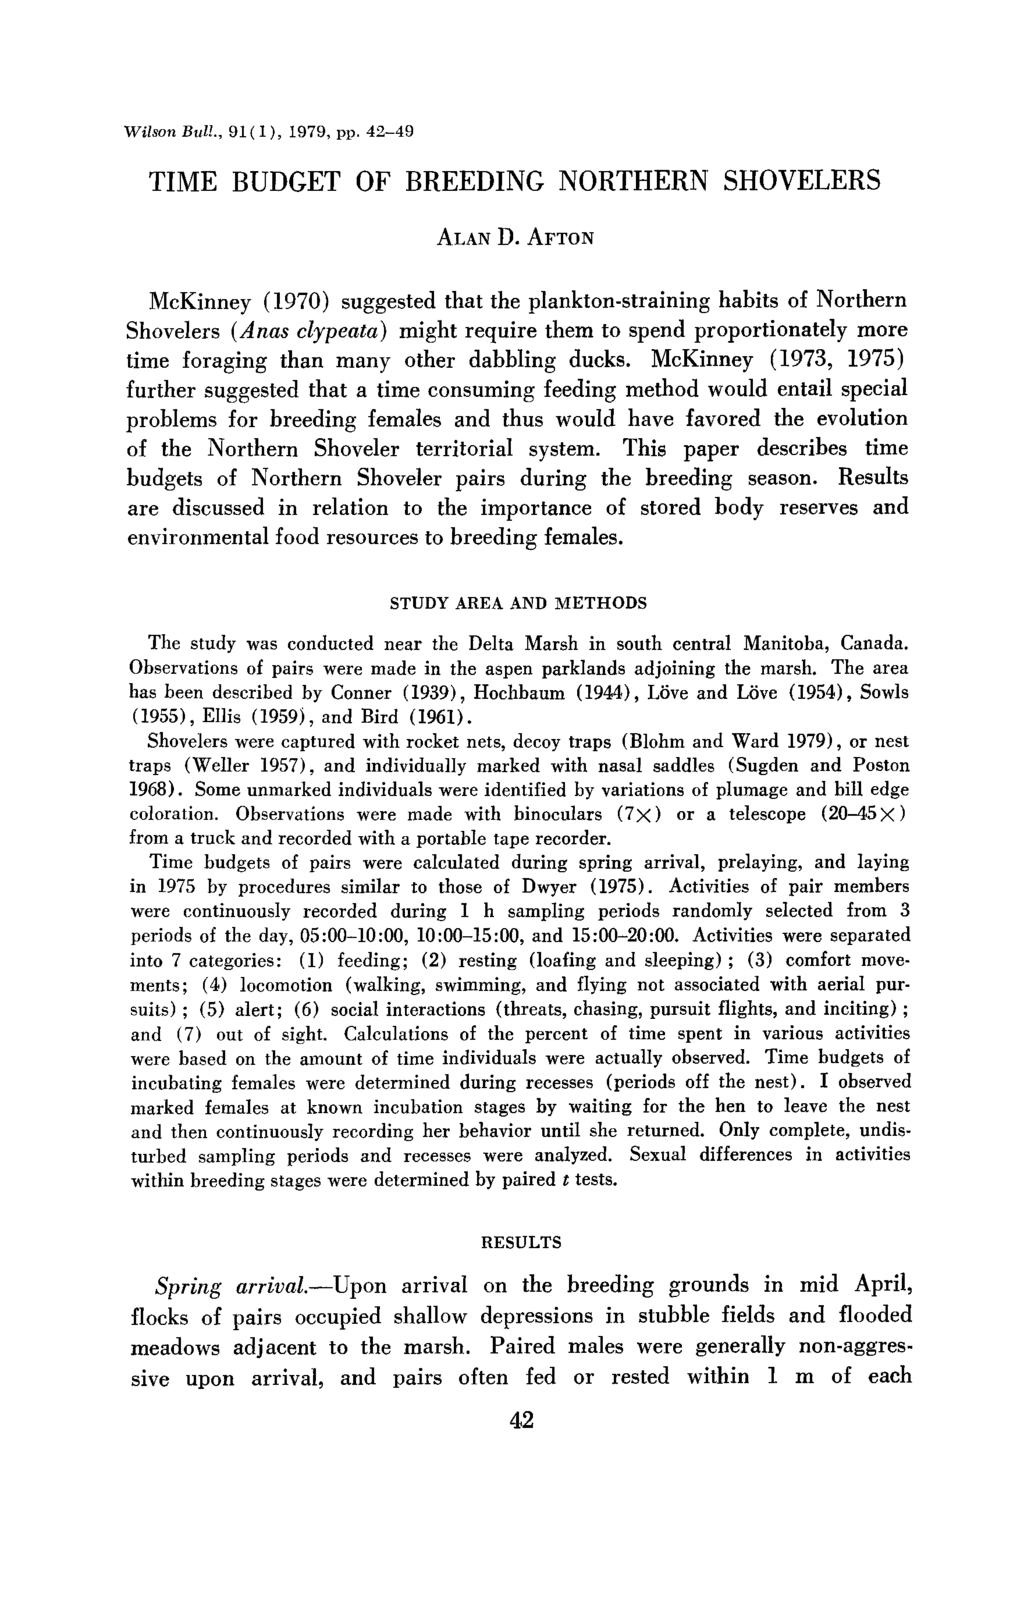 Wilson Bull., 91(l), 1979, pp. 42-49 TIME BUDGET OF BREEDING NORTHERN SHOVELERS ALAN D.